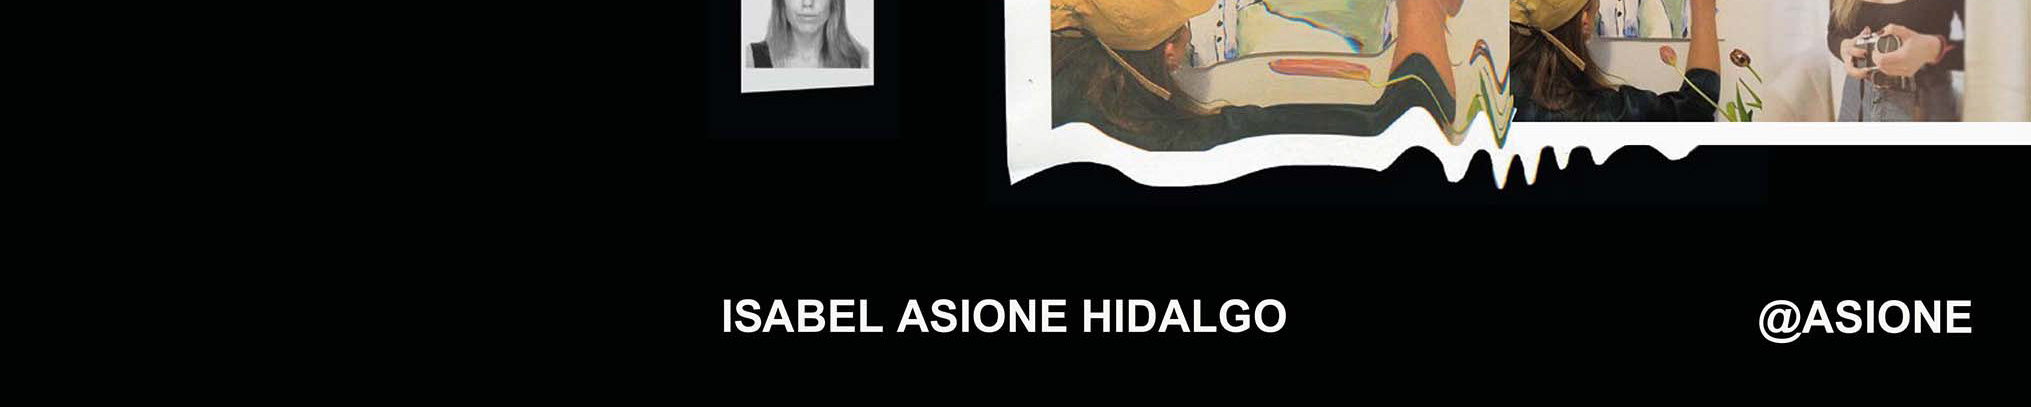 Isabel asione Hidalgos profilbanner